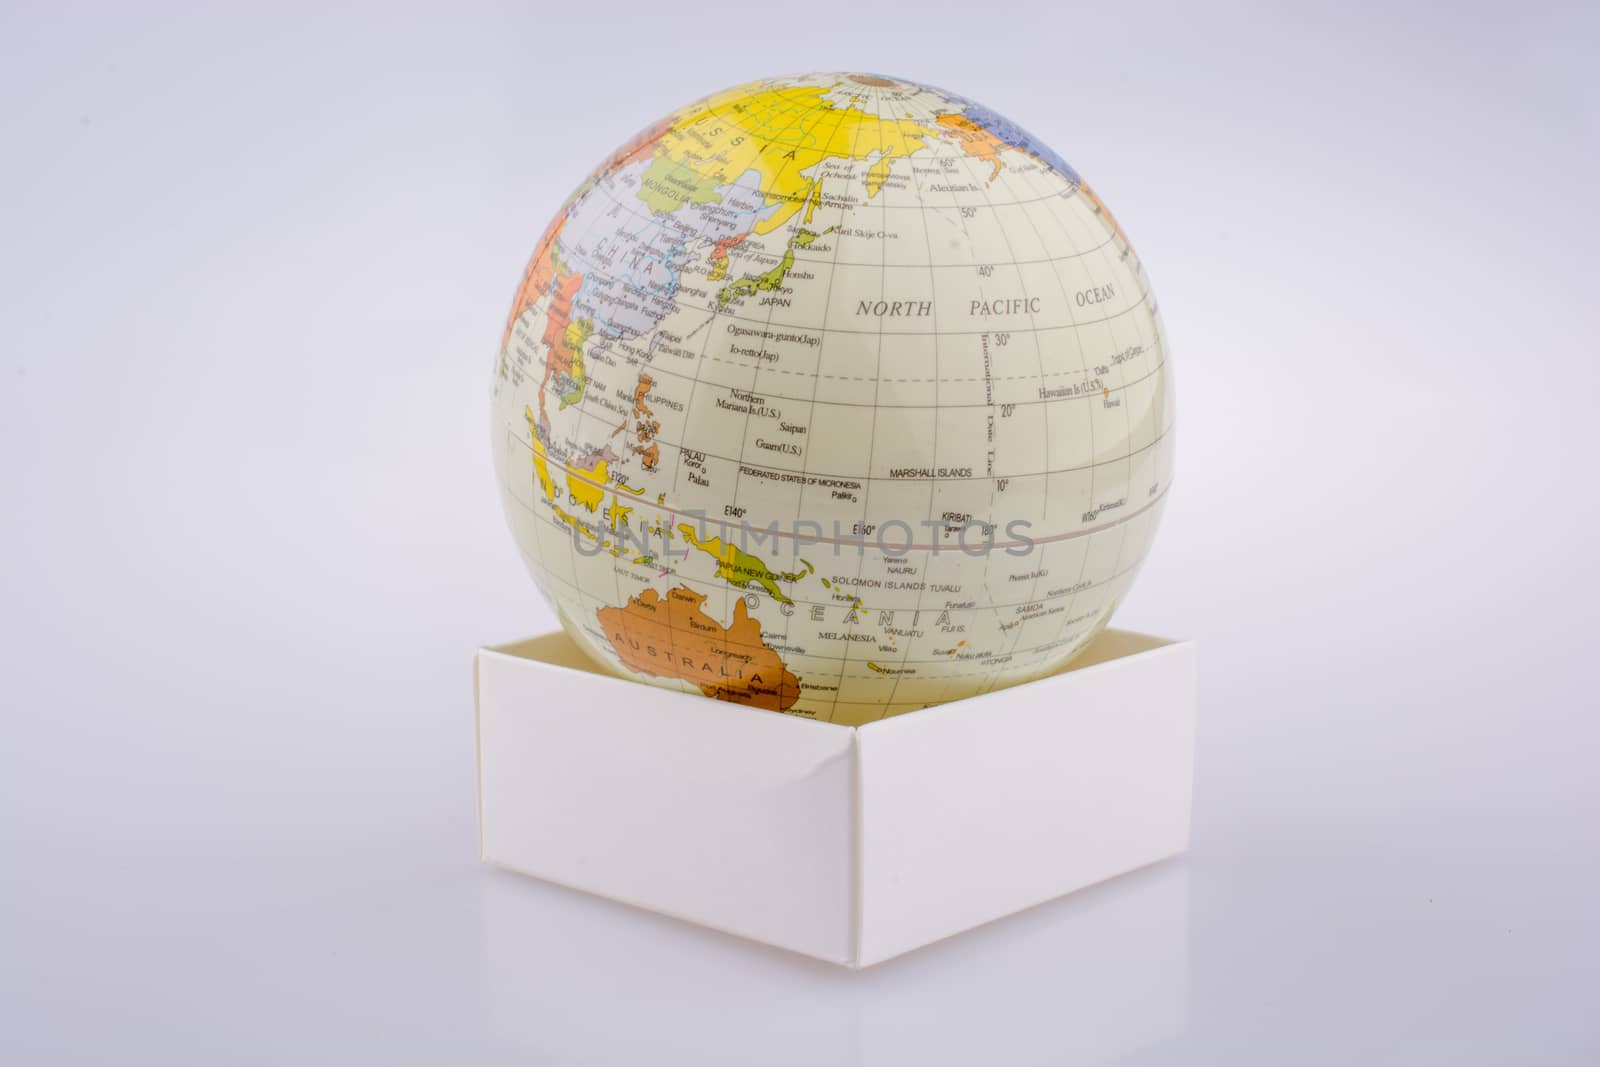 Little model globe put on a white box by berkay